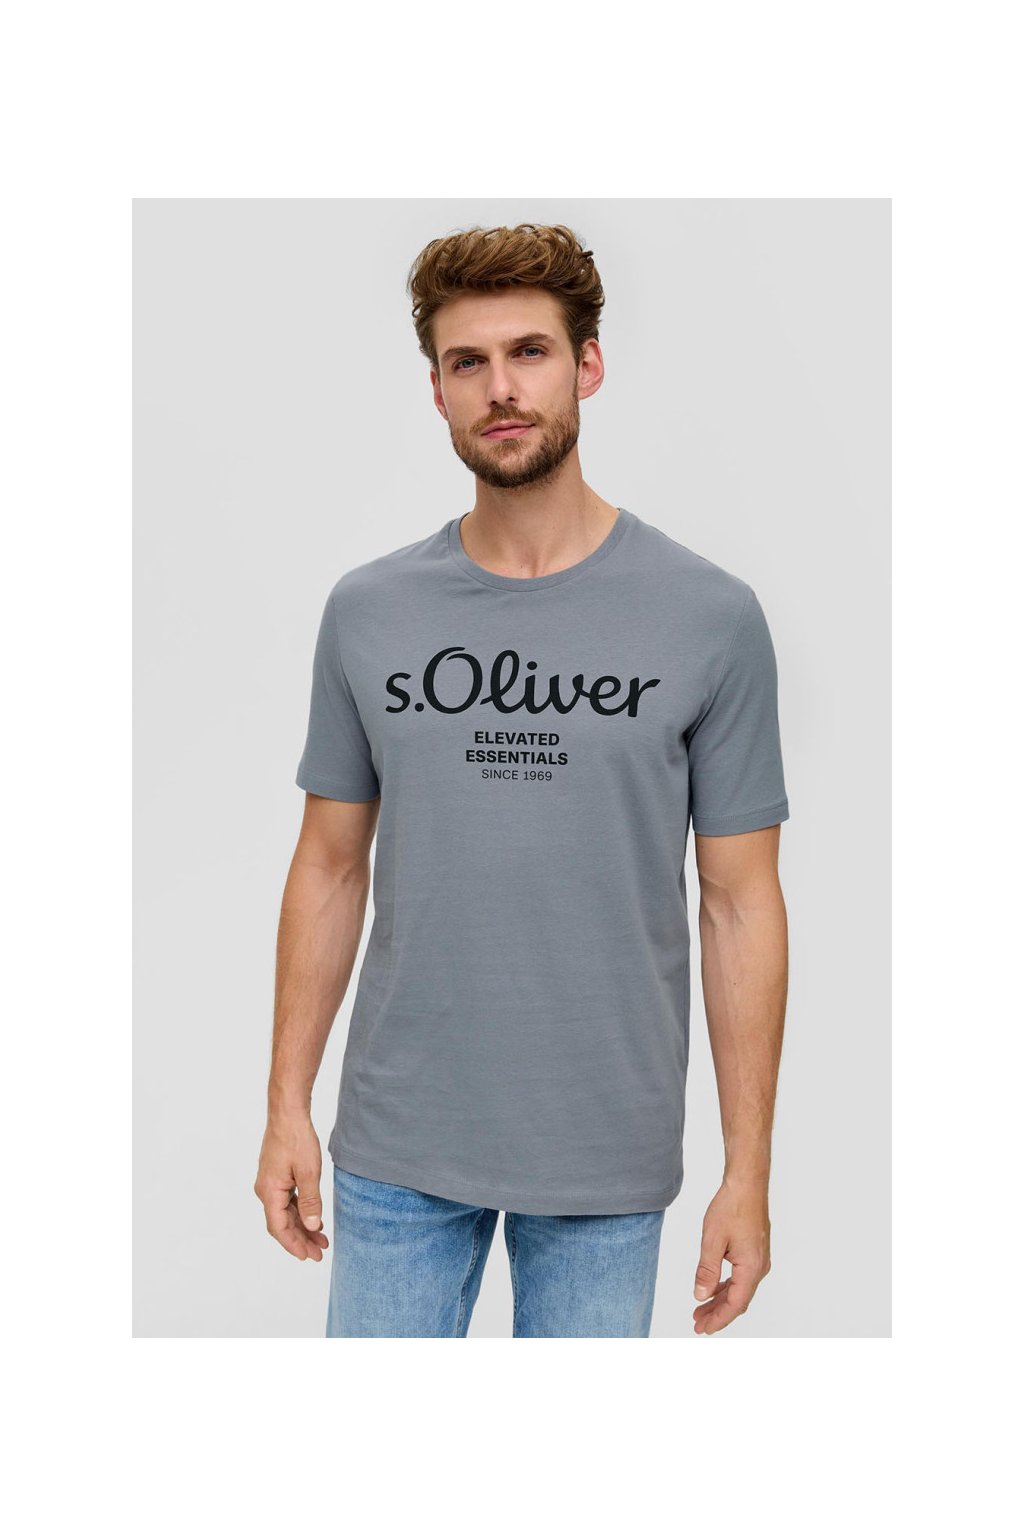 Pánske tričko s.OLIVER 2139909 95D1